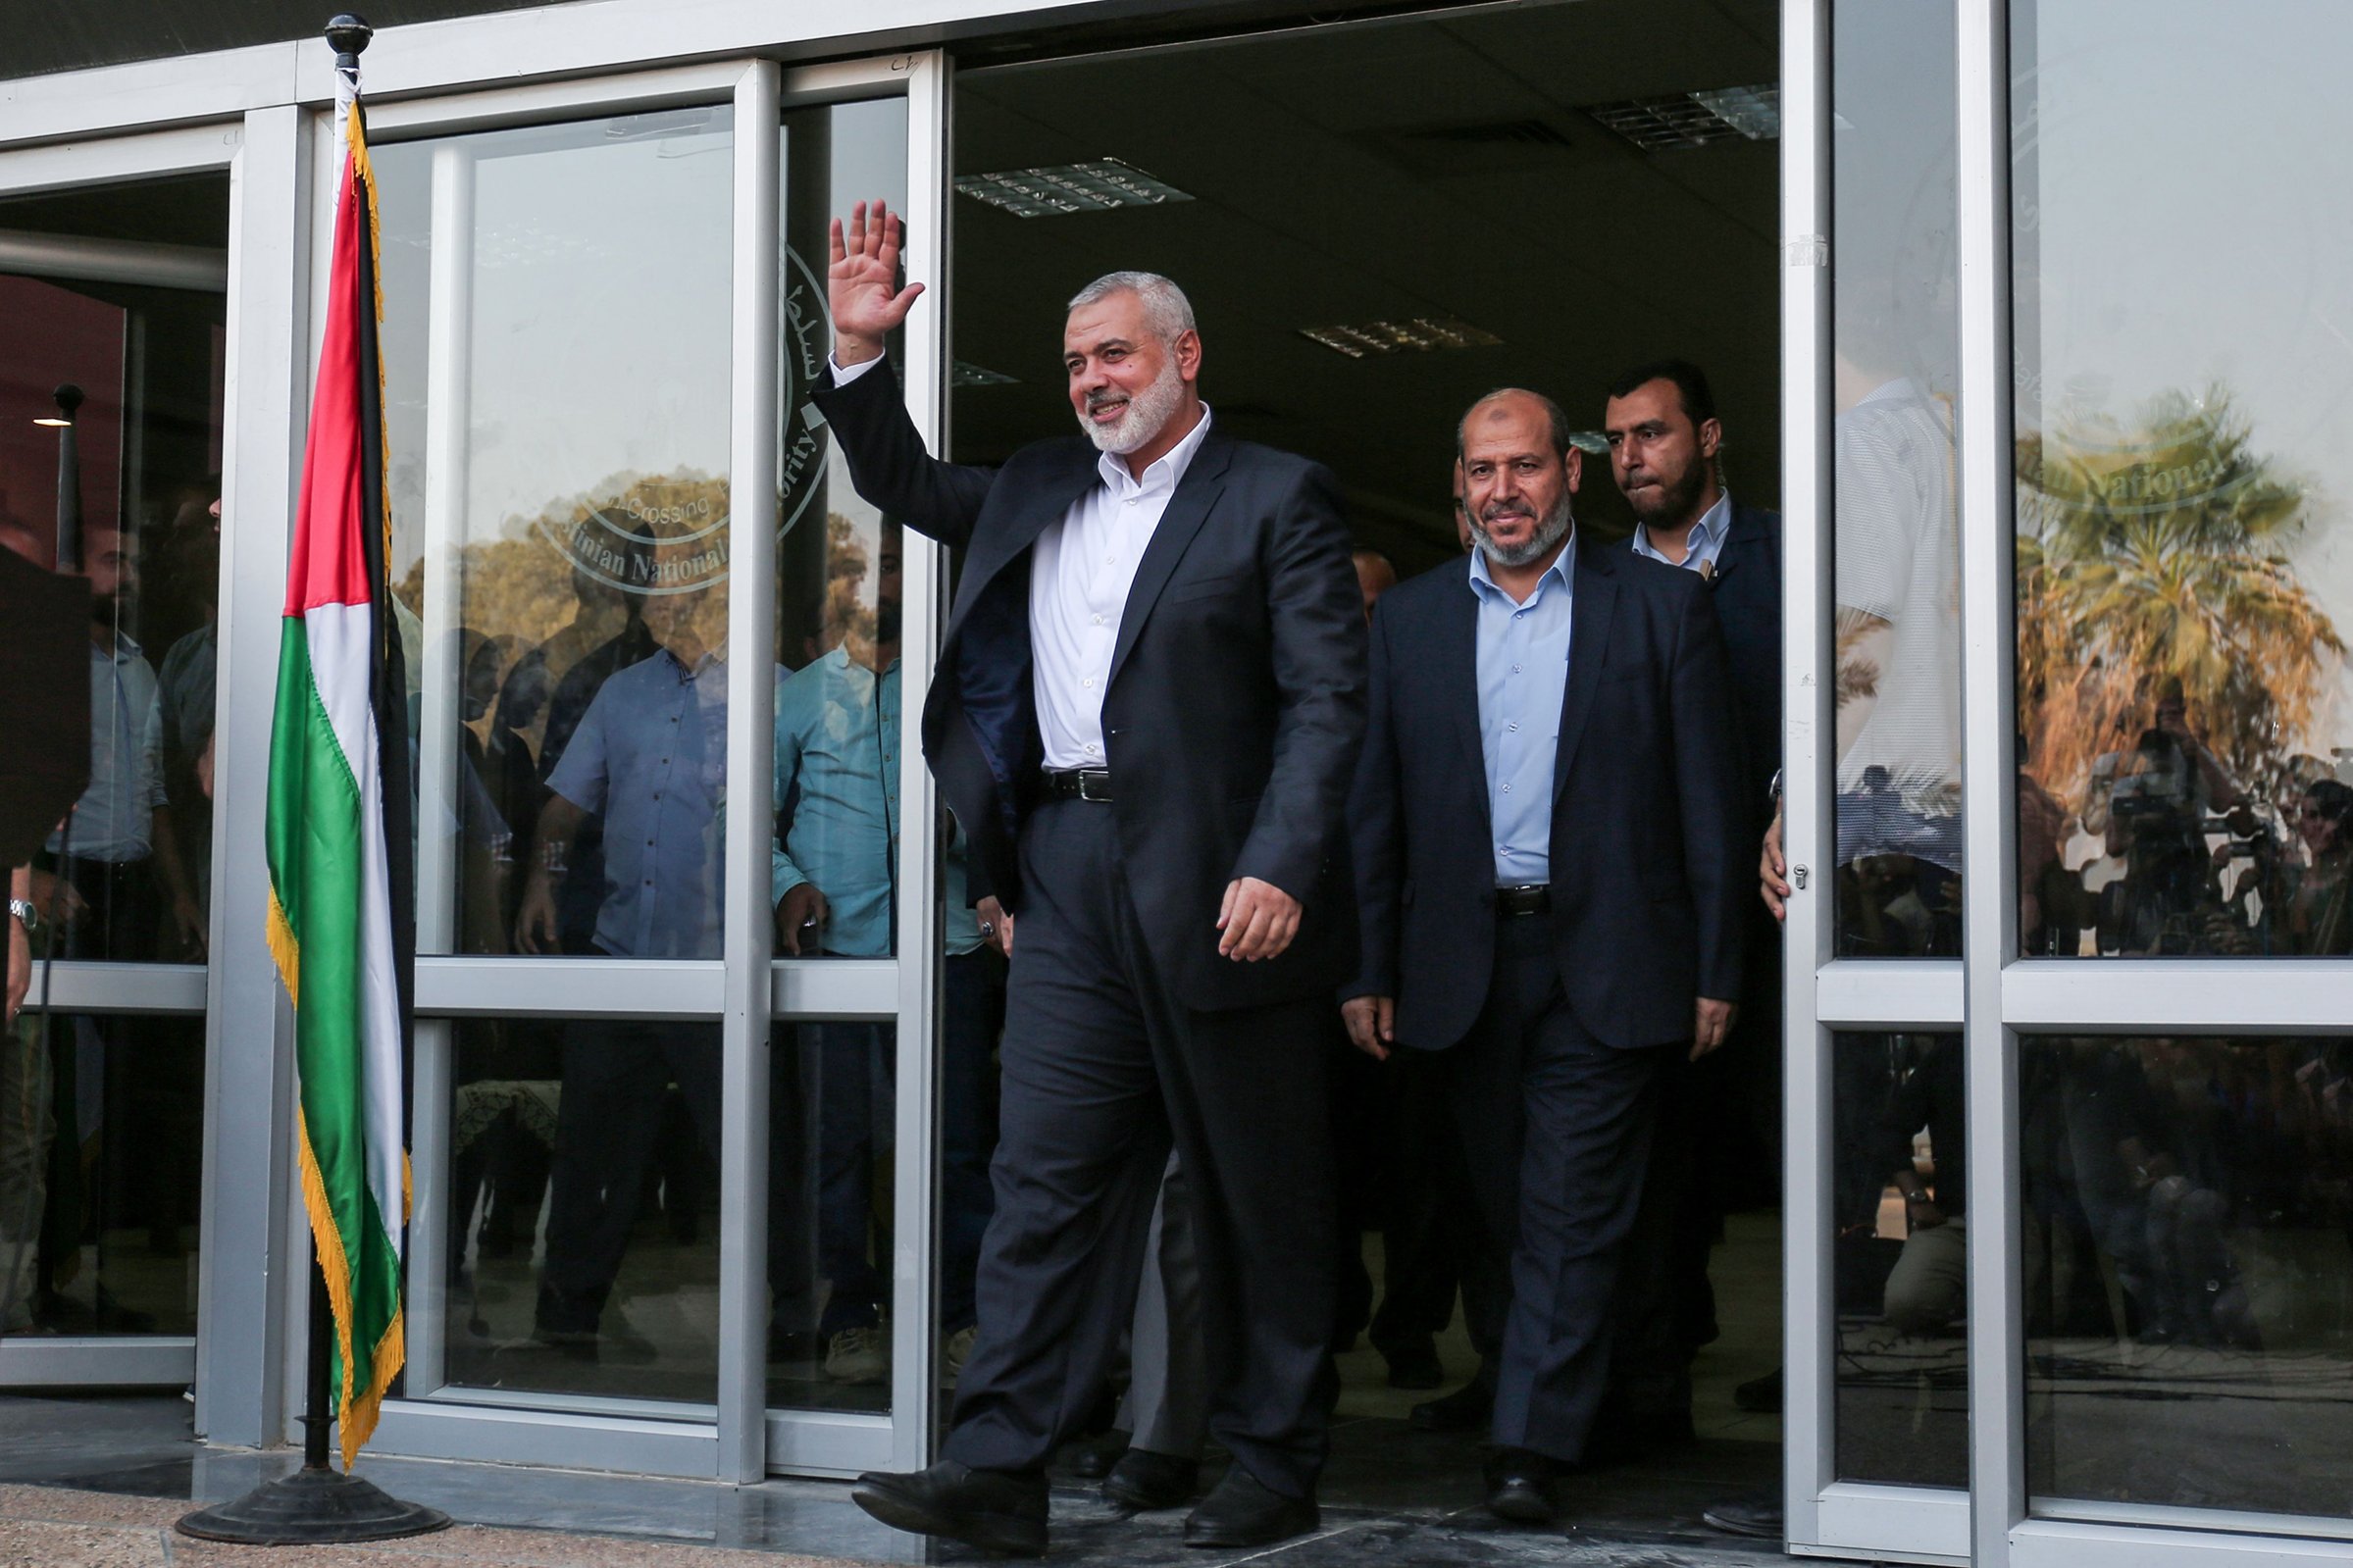 Hamas elected Ismail Haniyeh leader in May.